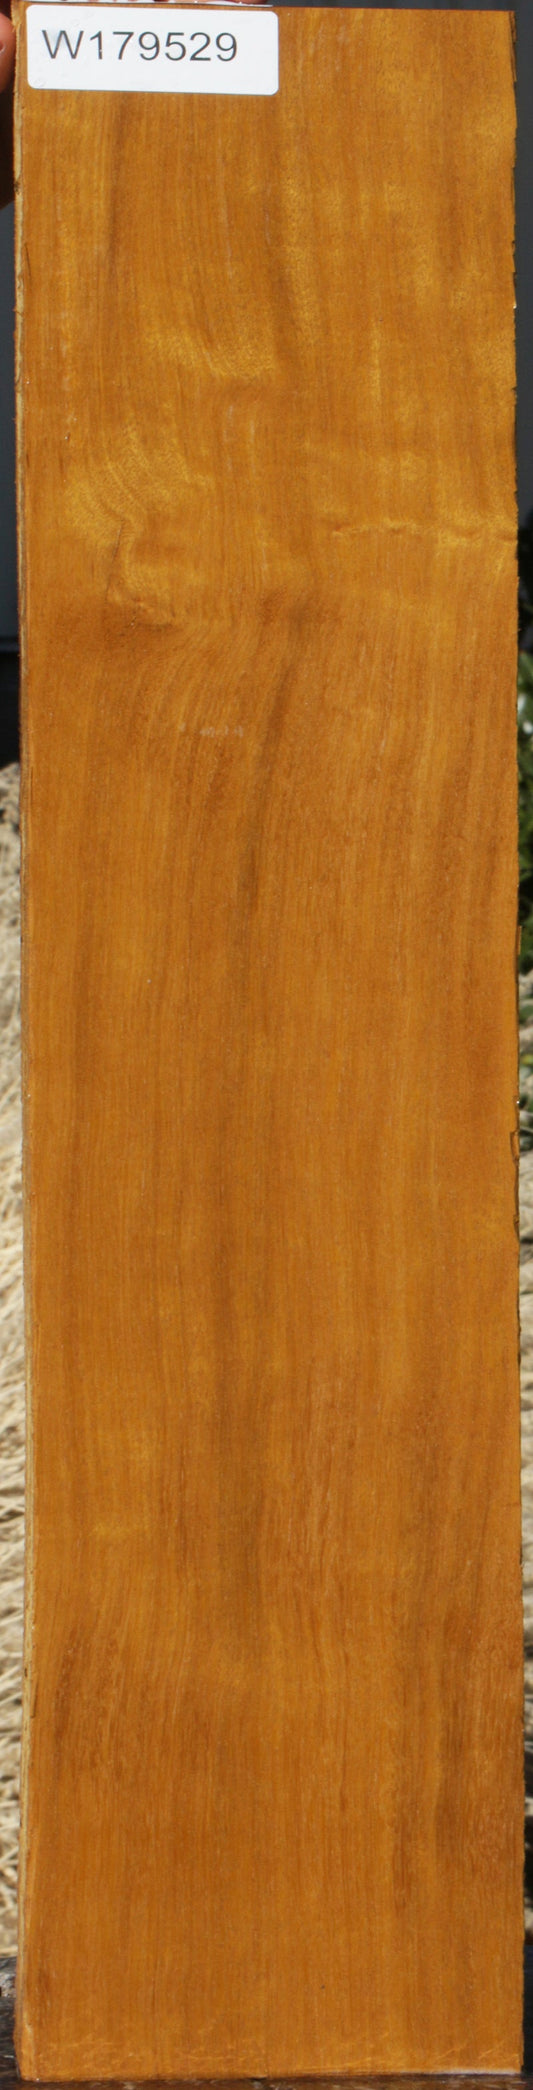 Piquiarana Micro Lumber